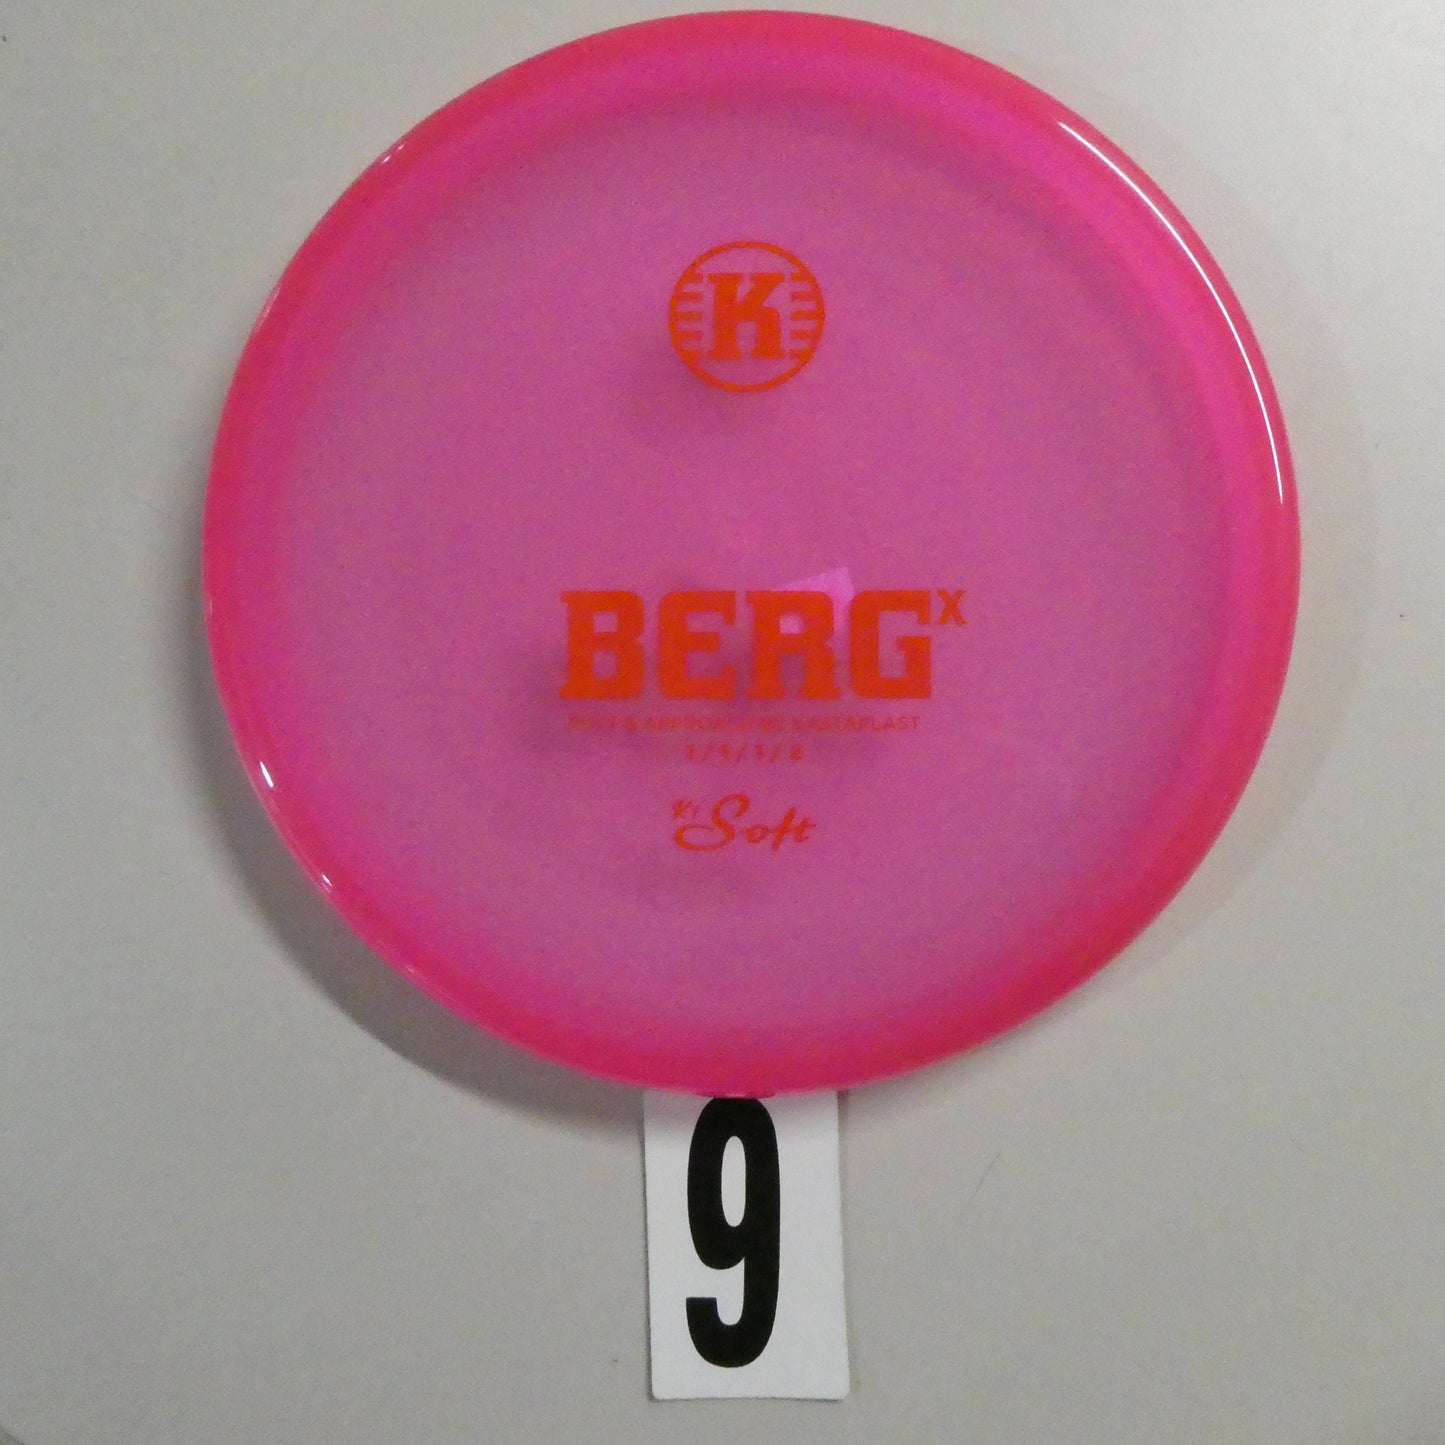 K-1 Soft Berg X